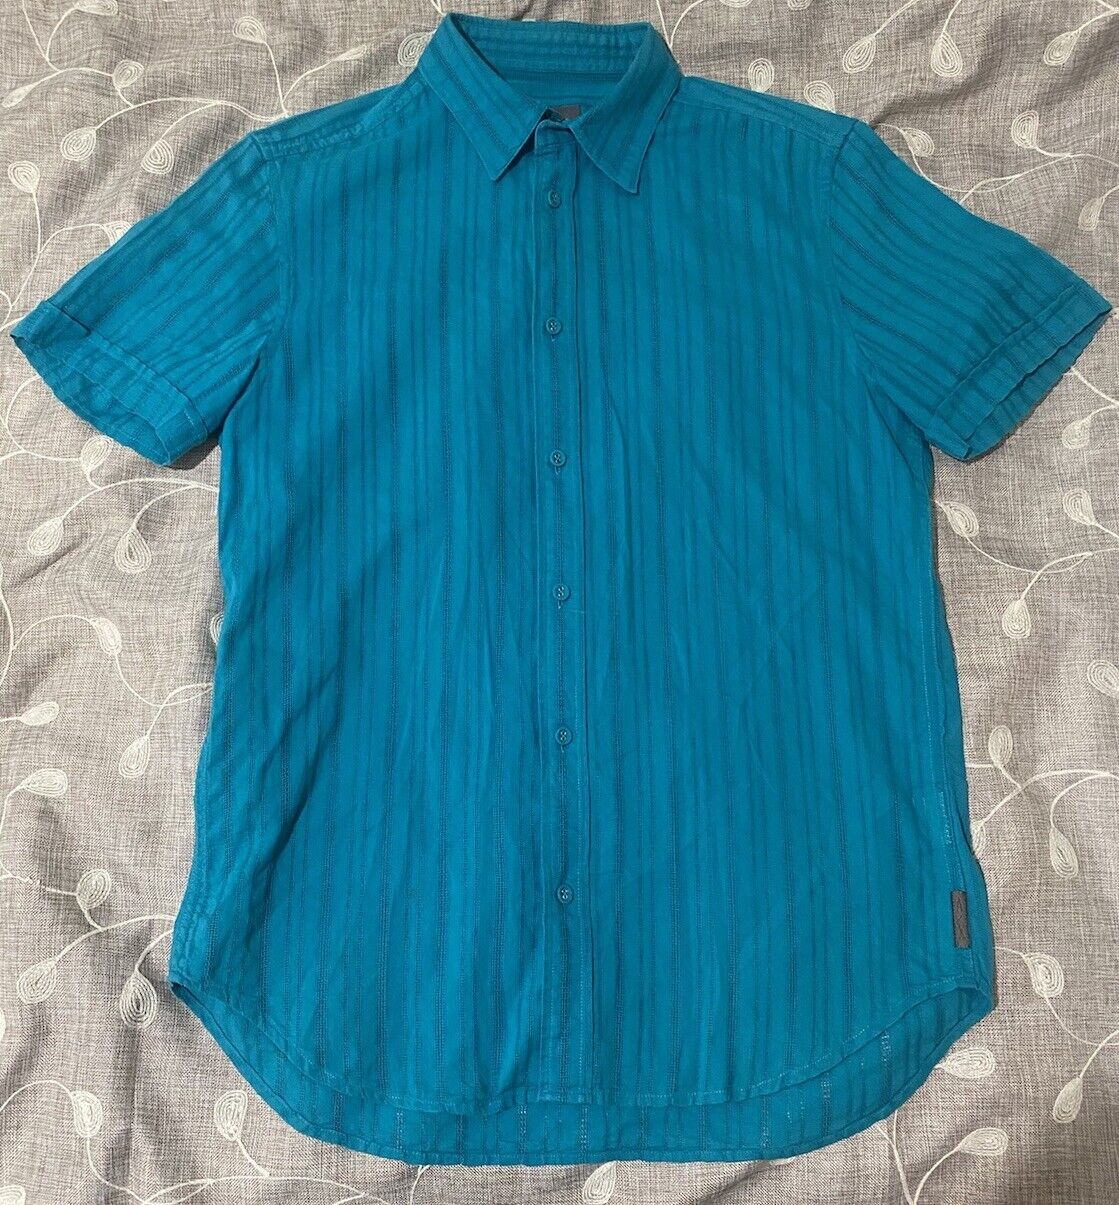 Armani Exchange SMALL button up shirt mens Teal Blue Semi-sheer Lightweight